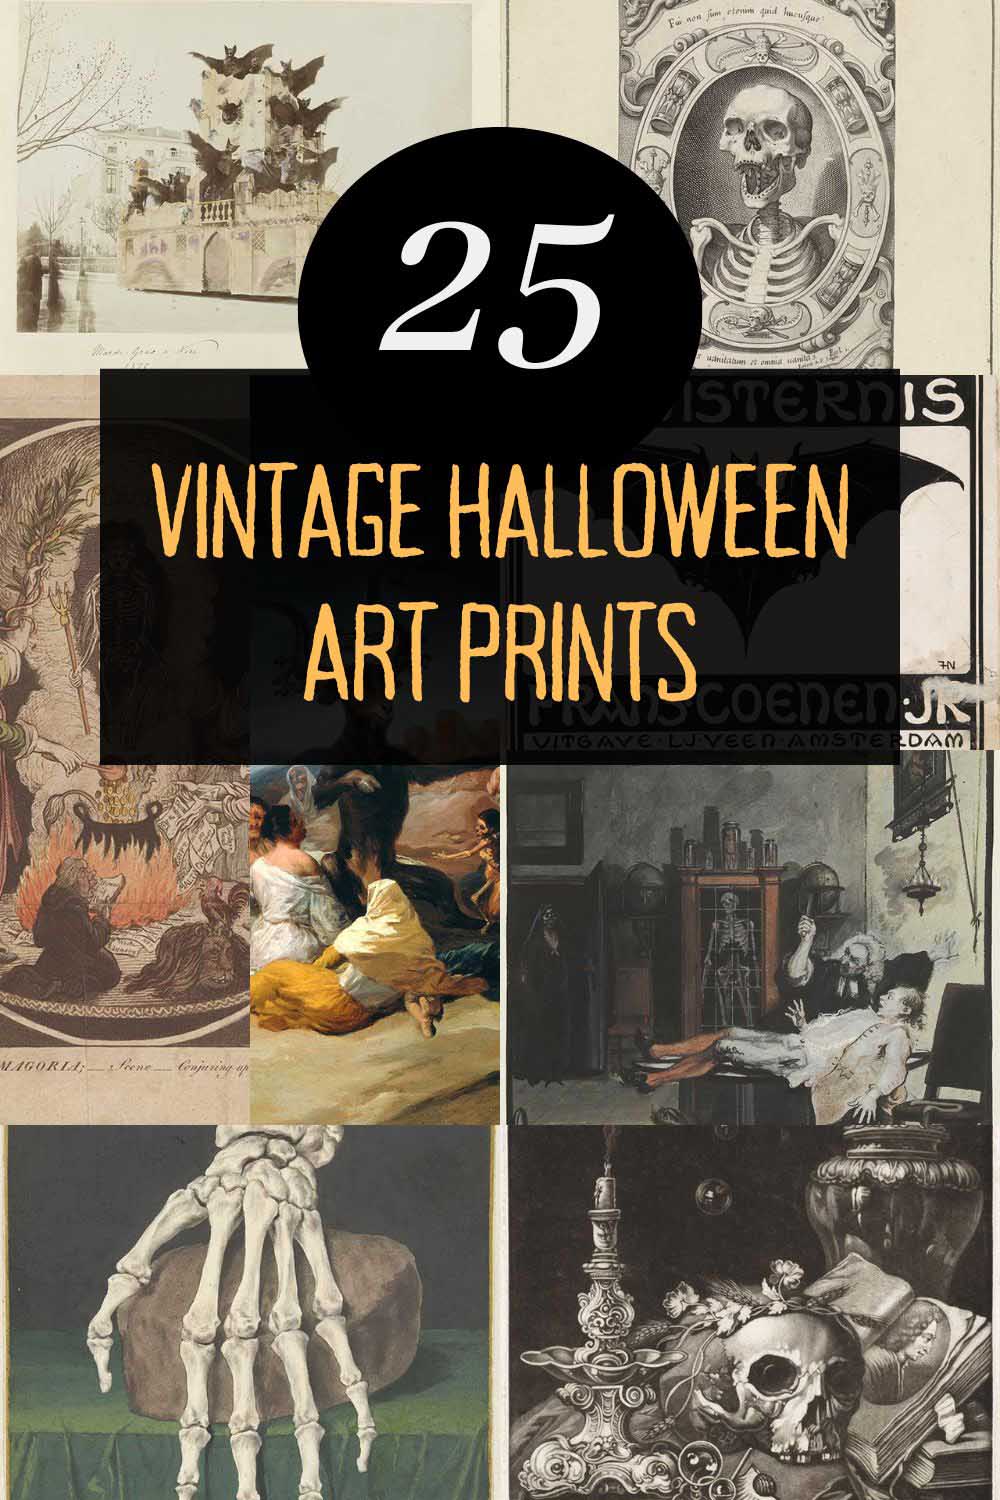 25 vintage Halloween art prints in the Public Domain Pin